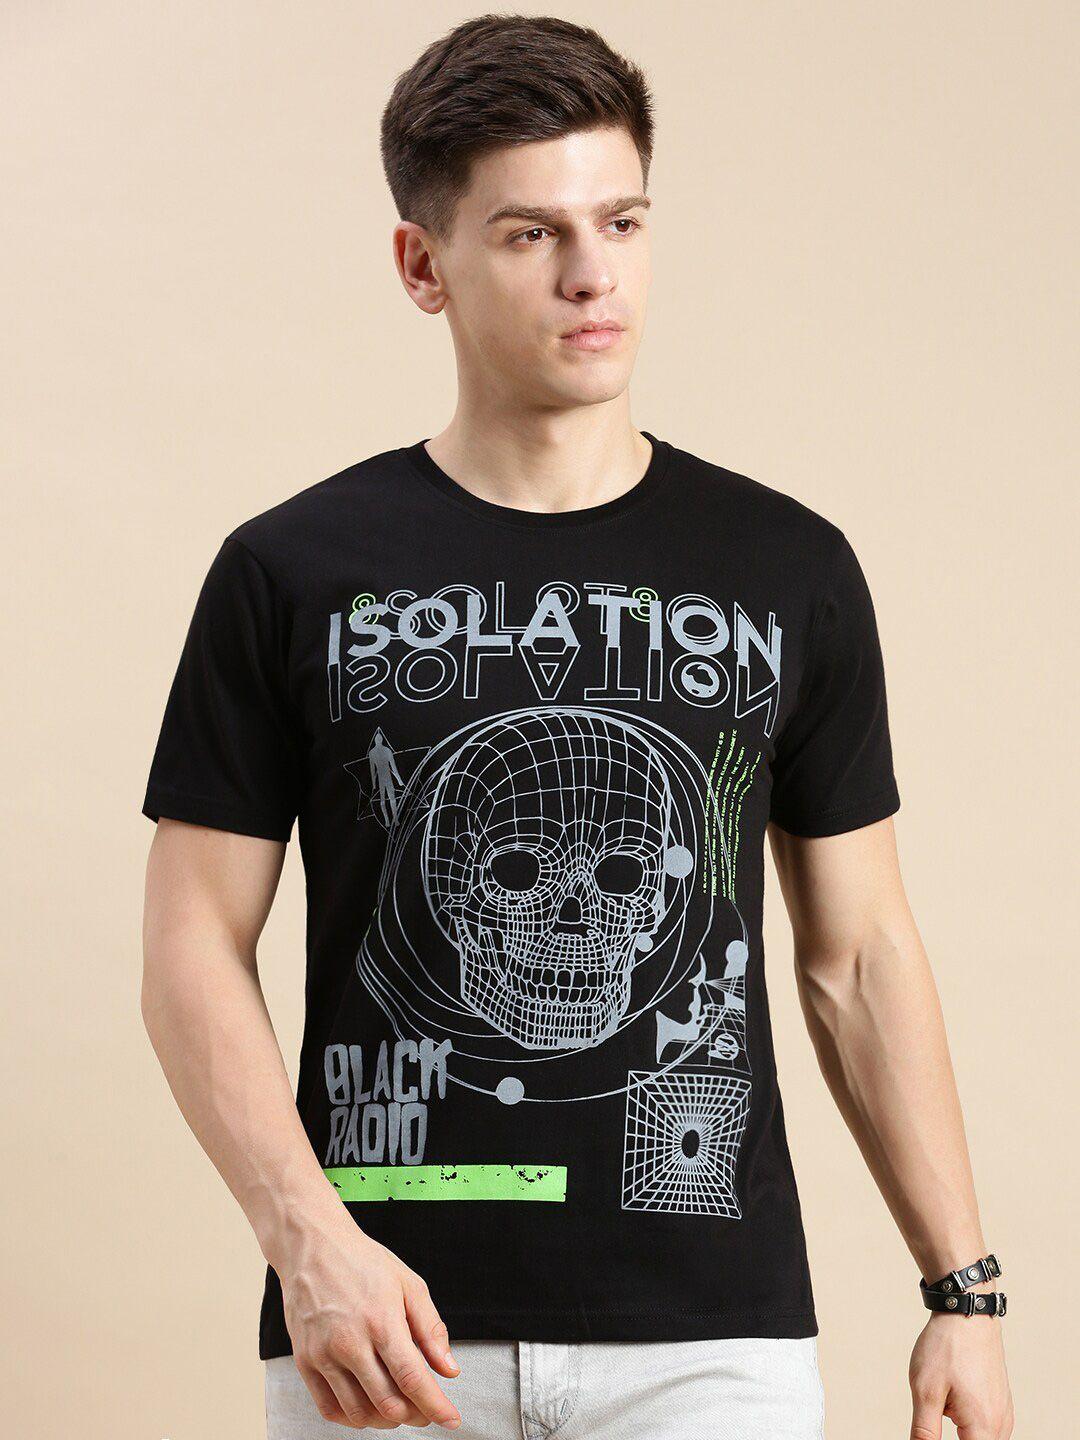 black radio conversational printed pure cotton t-shirt